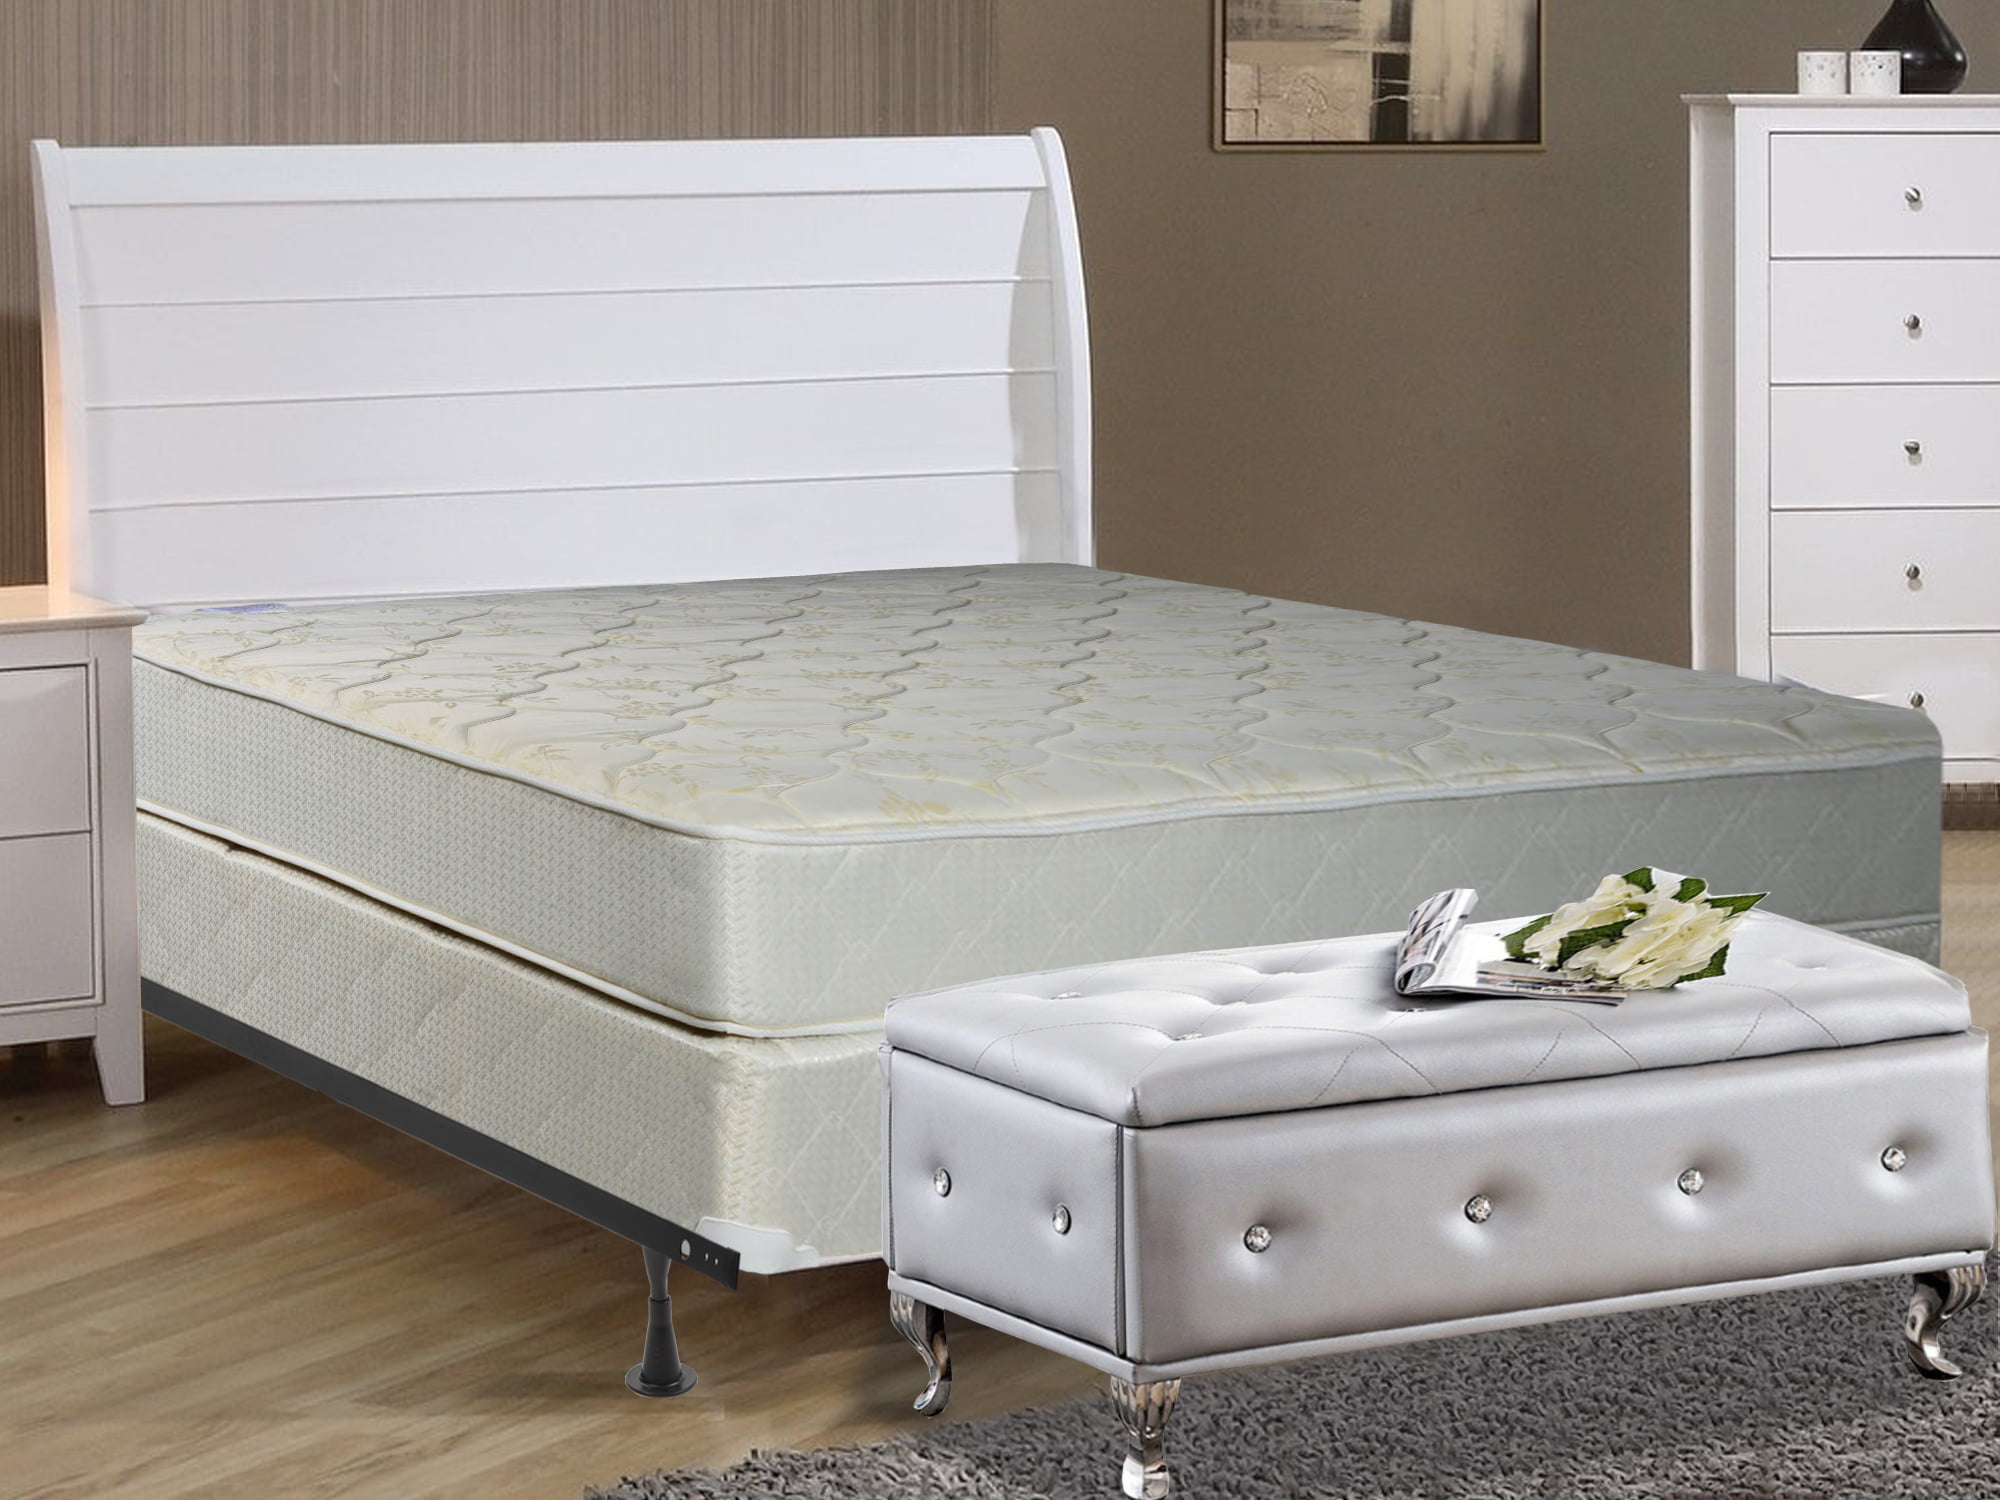 full size medium firm box spring mattress set